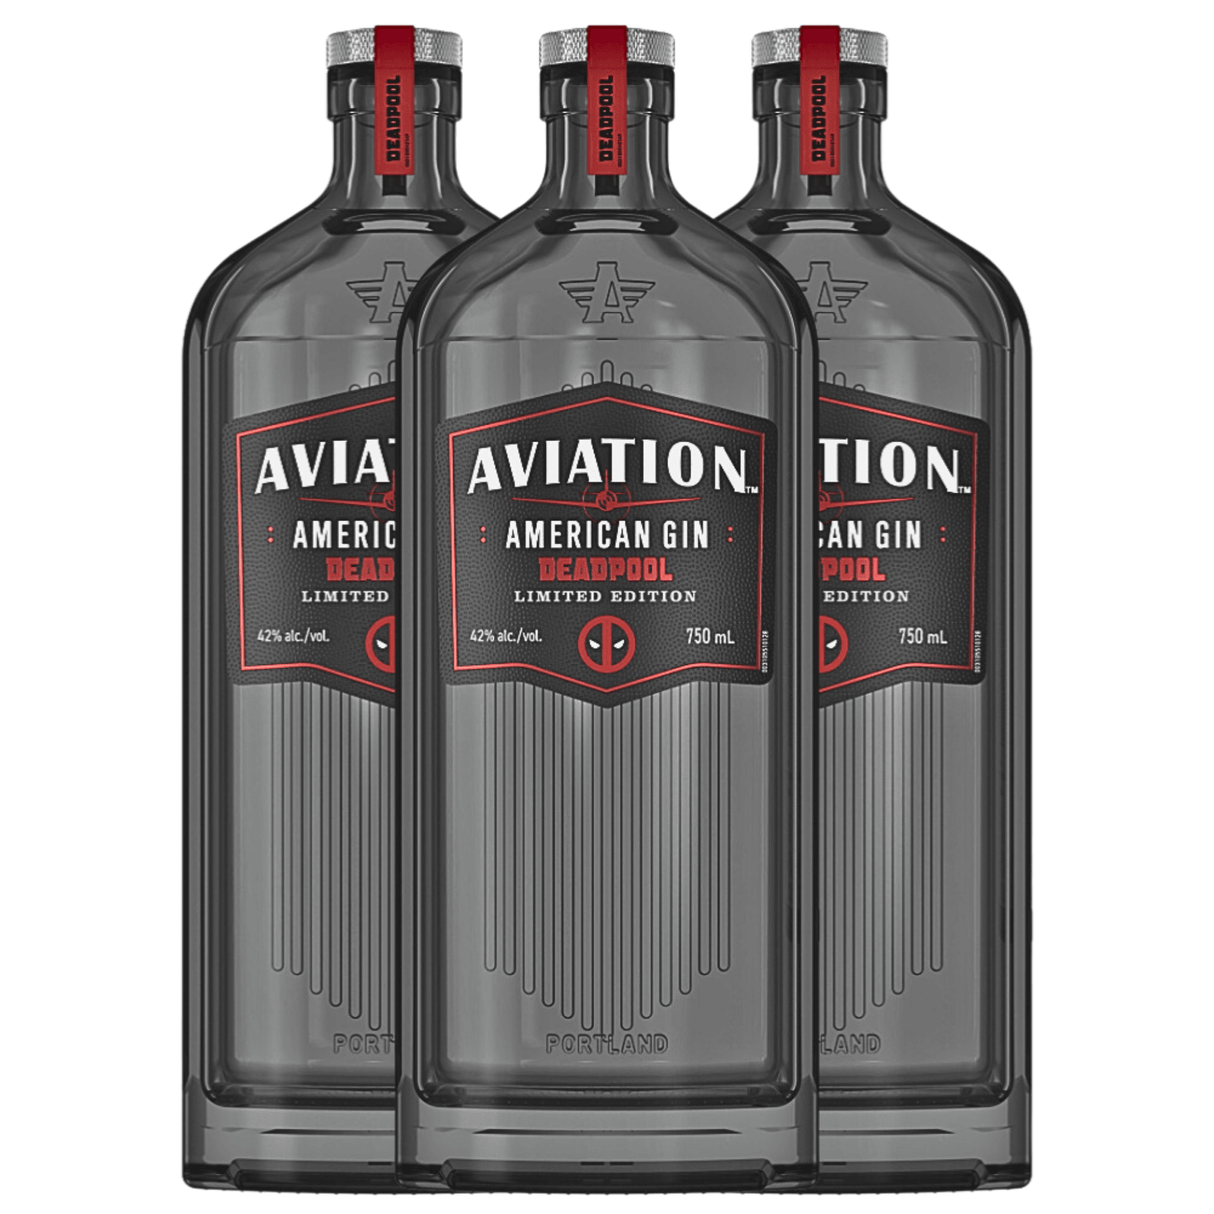 Aviation X Deadpool 3 Gin Limited Edition - Liquor Geeks